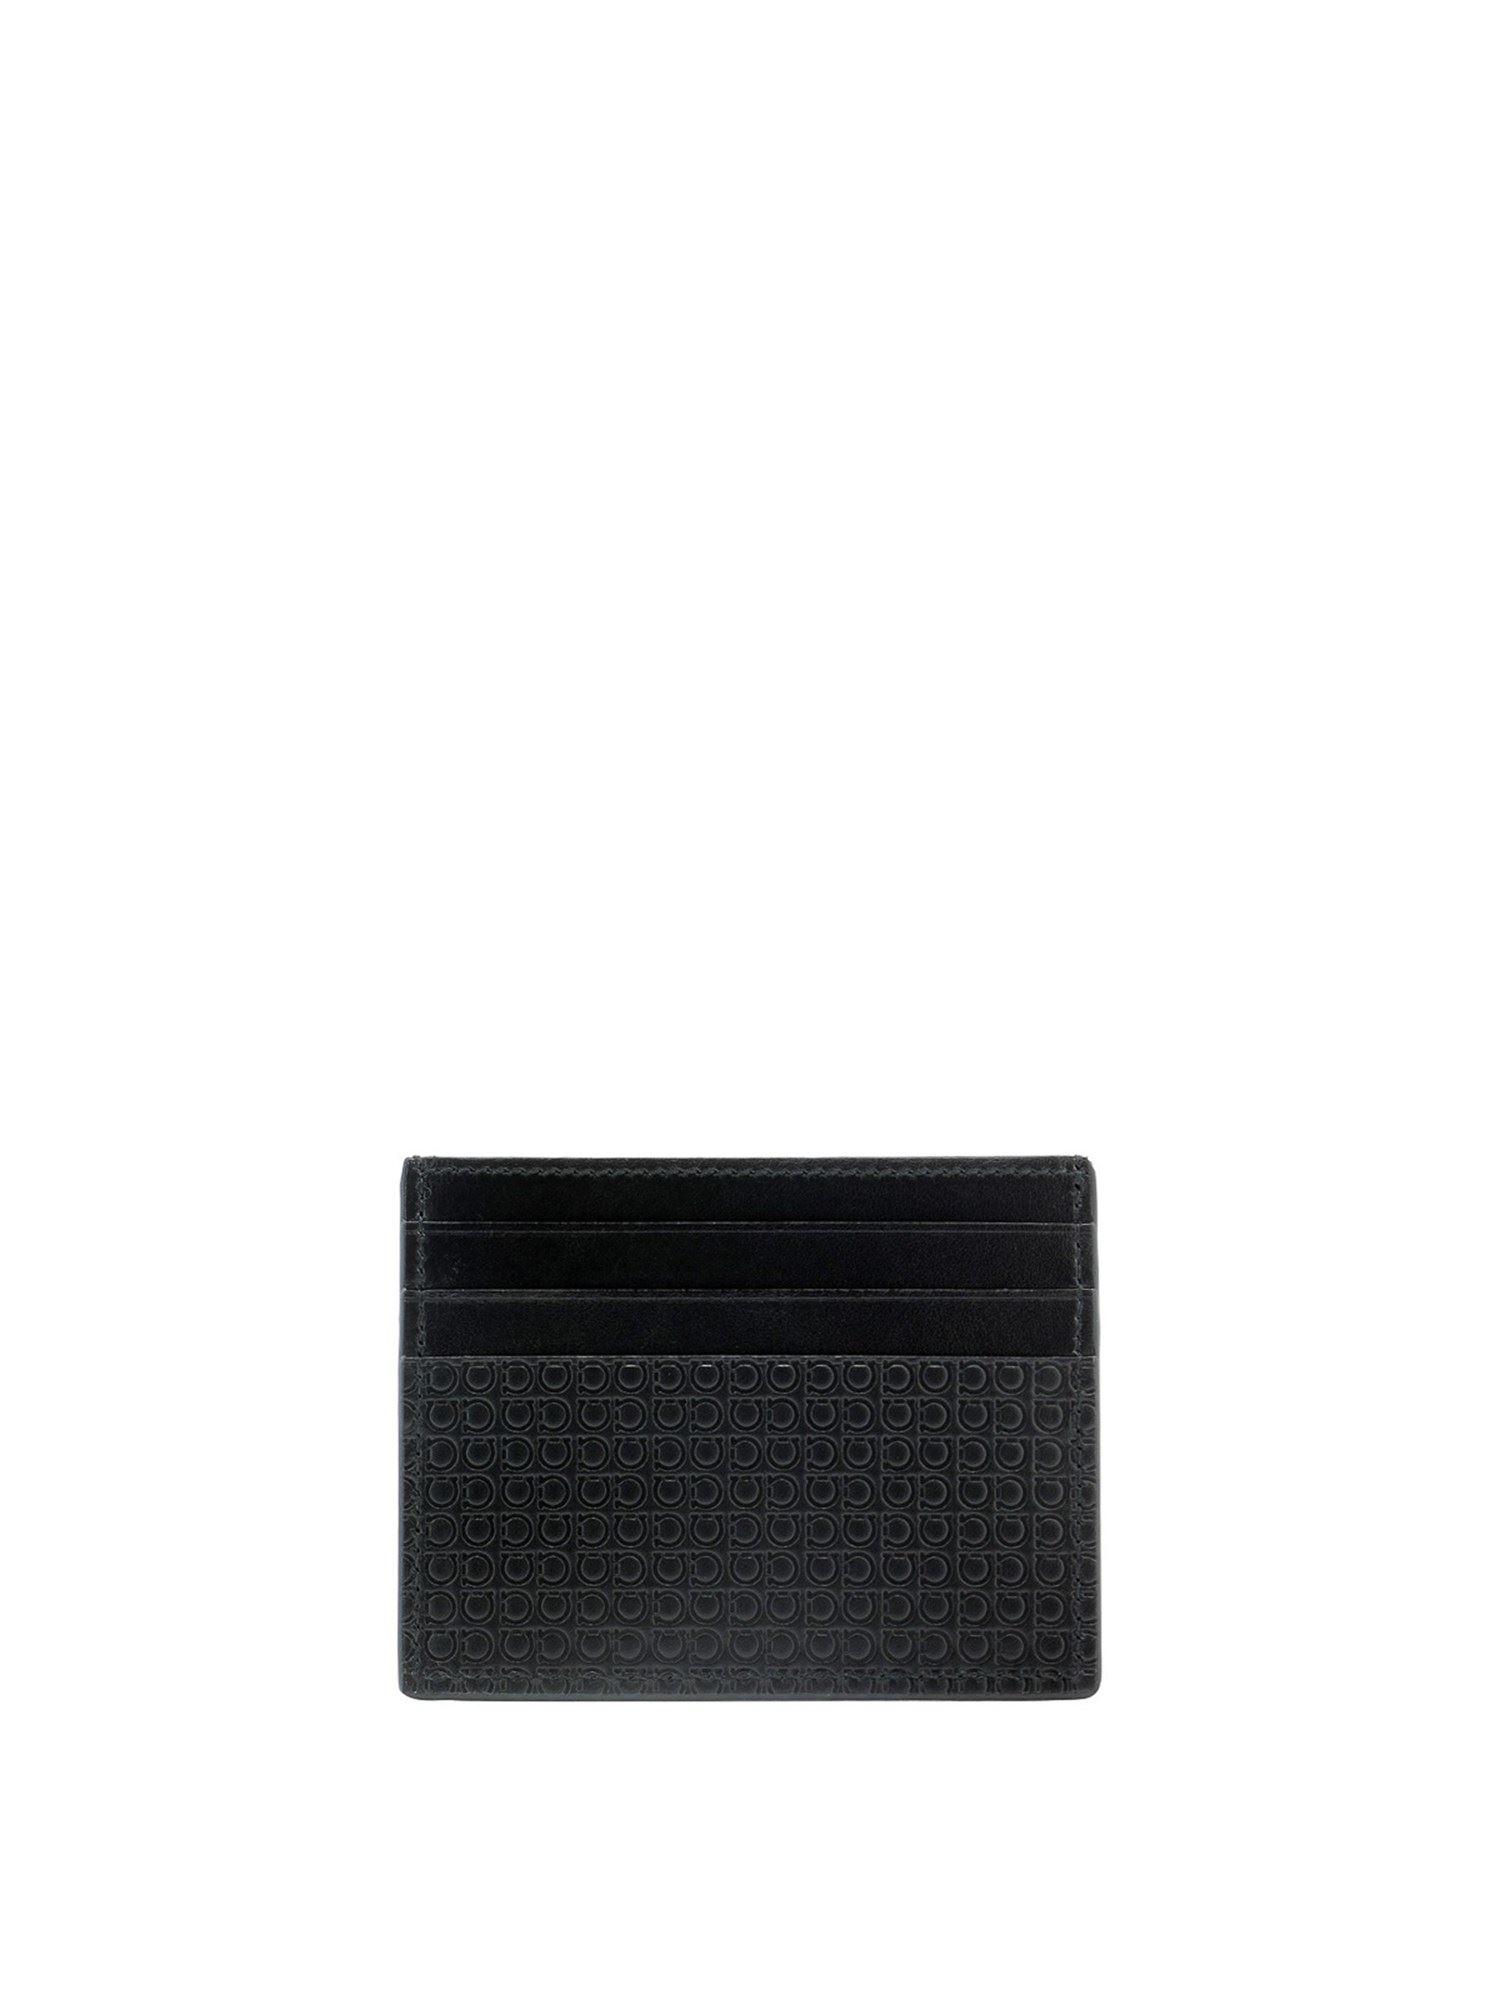 Ferragamo Leather Card Holder in Black for Men - Lyst